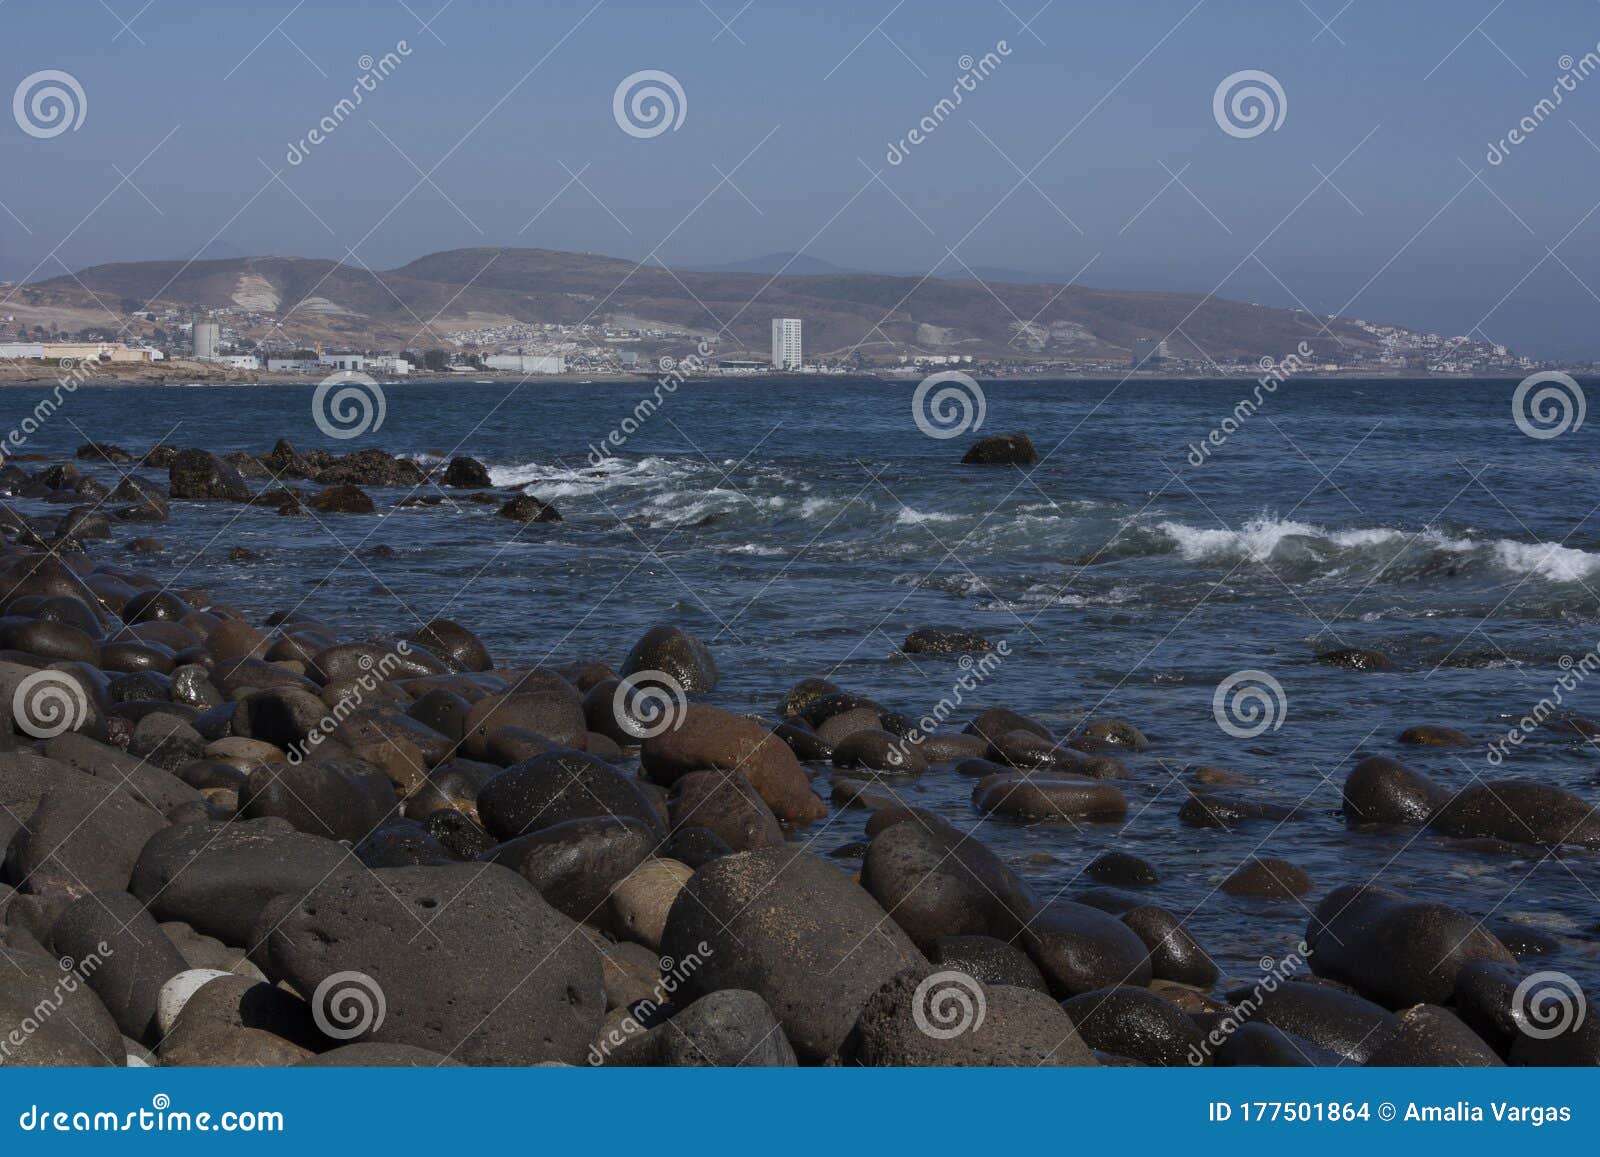 landscape with huge rocks blue sea foam waves and blue sky beach of baja california mexico